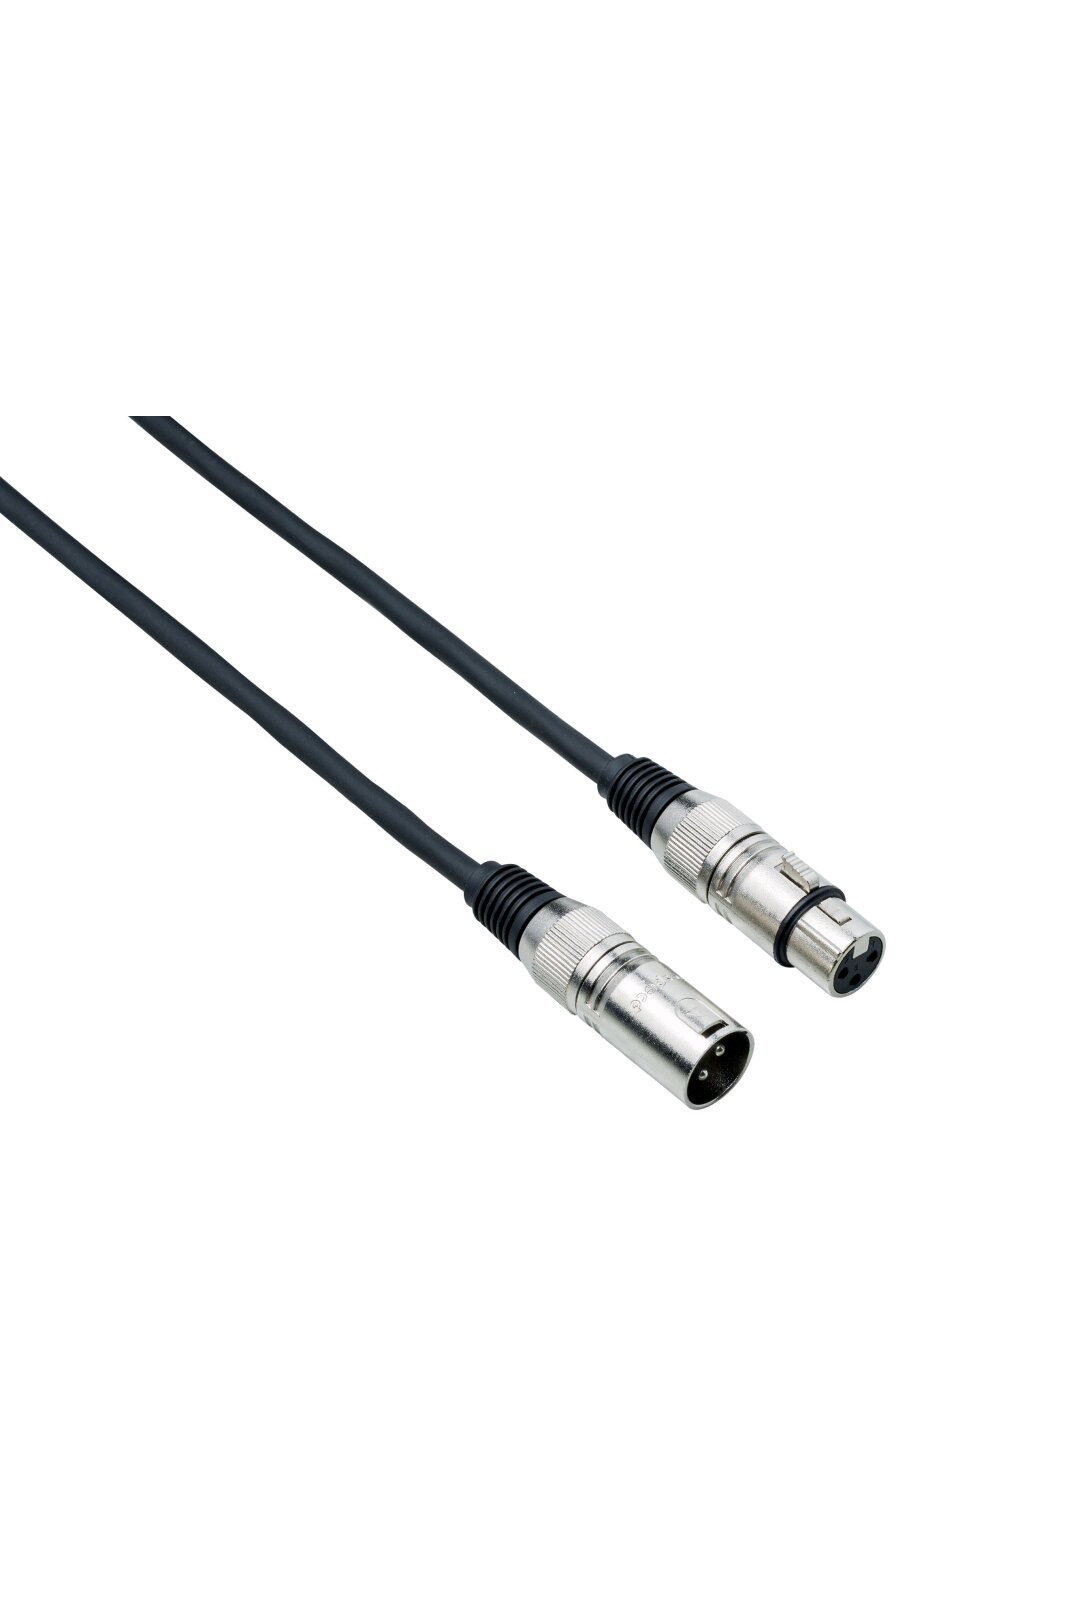 Bespeco DMX003 câble DMX 3 m : photo 1